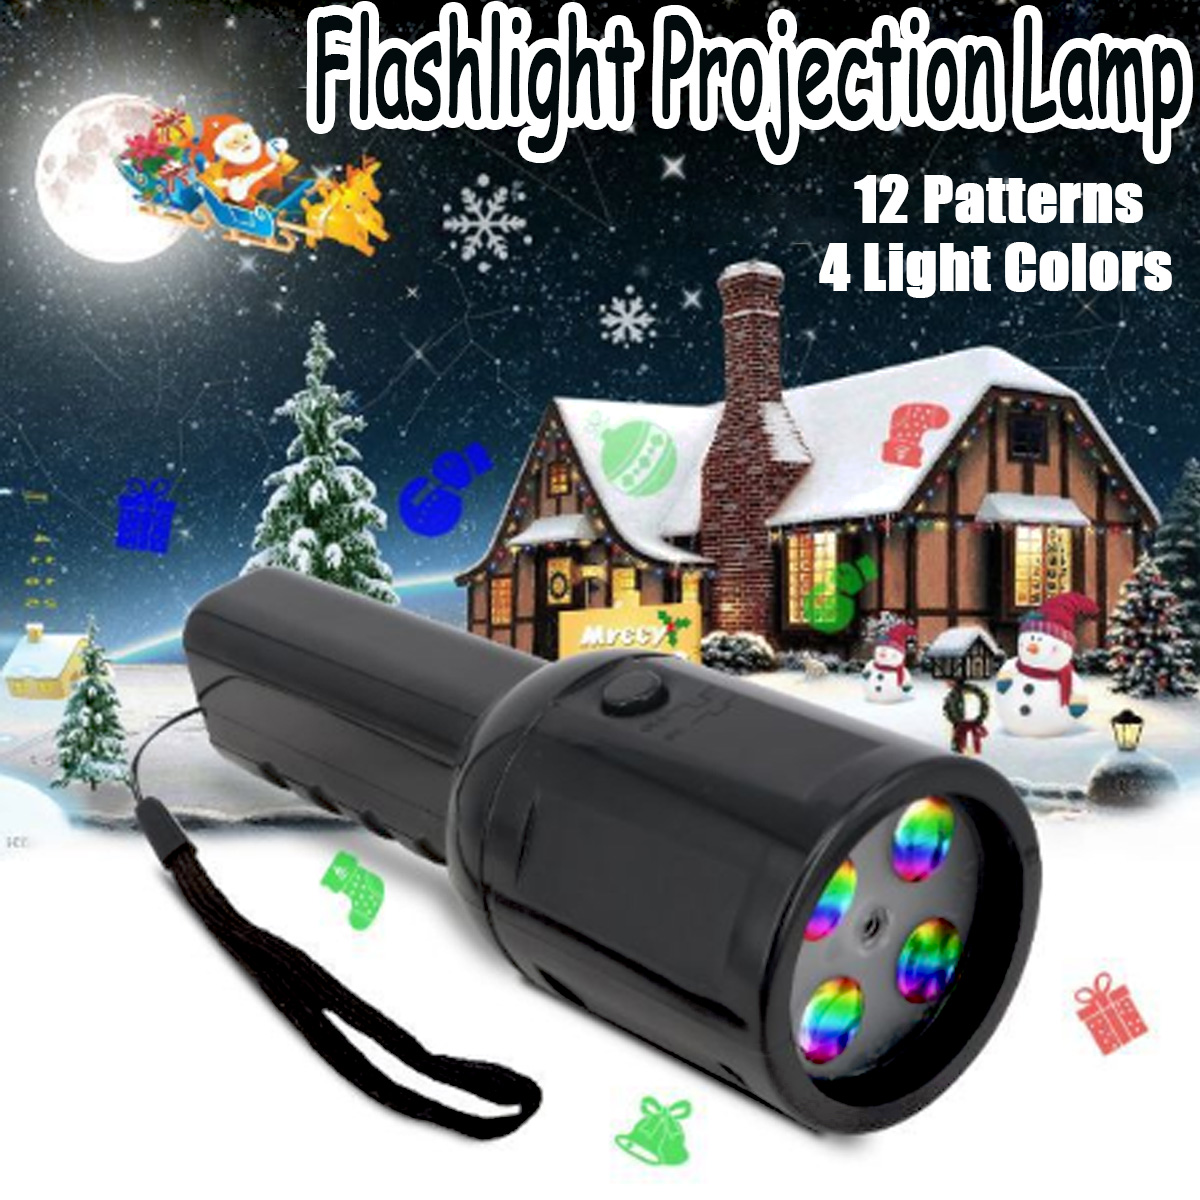 Christmas-12-Patterns-Flashlight-Projector-Lights-Garden-Decorative-Lamp-Light-Waterproof-Sparkling--1792180-1